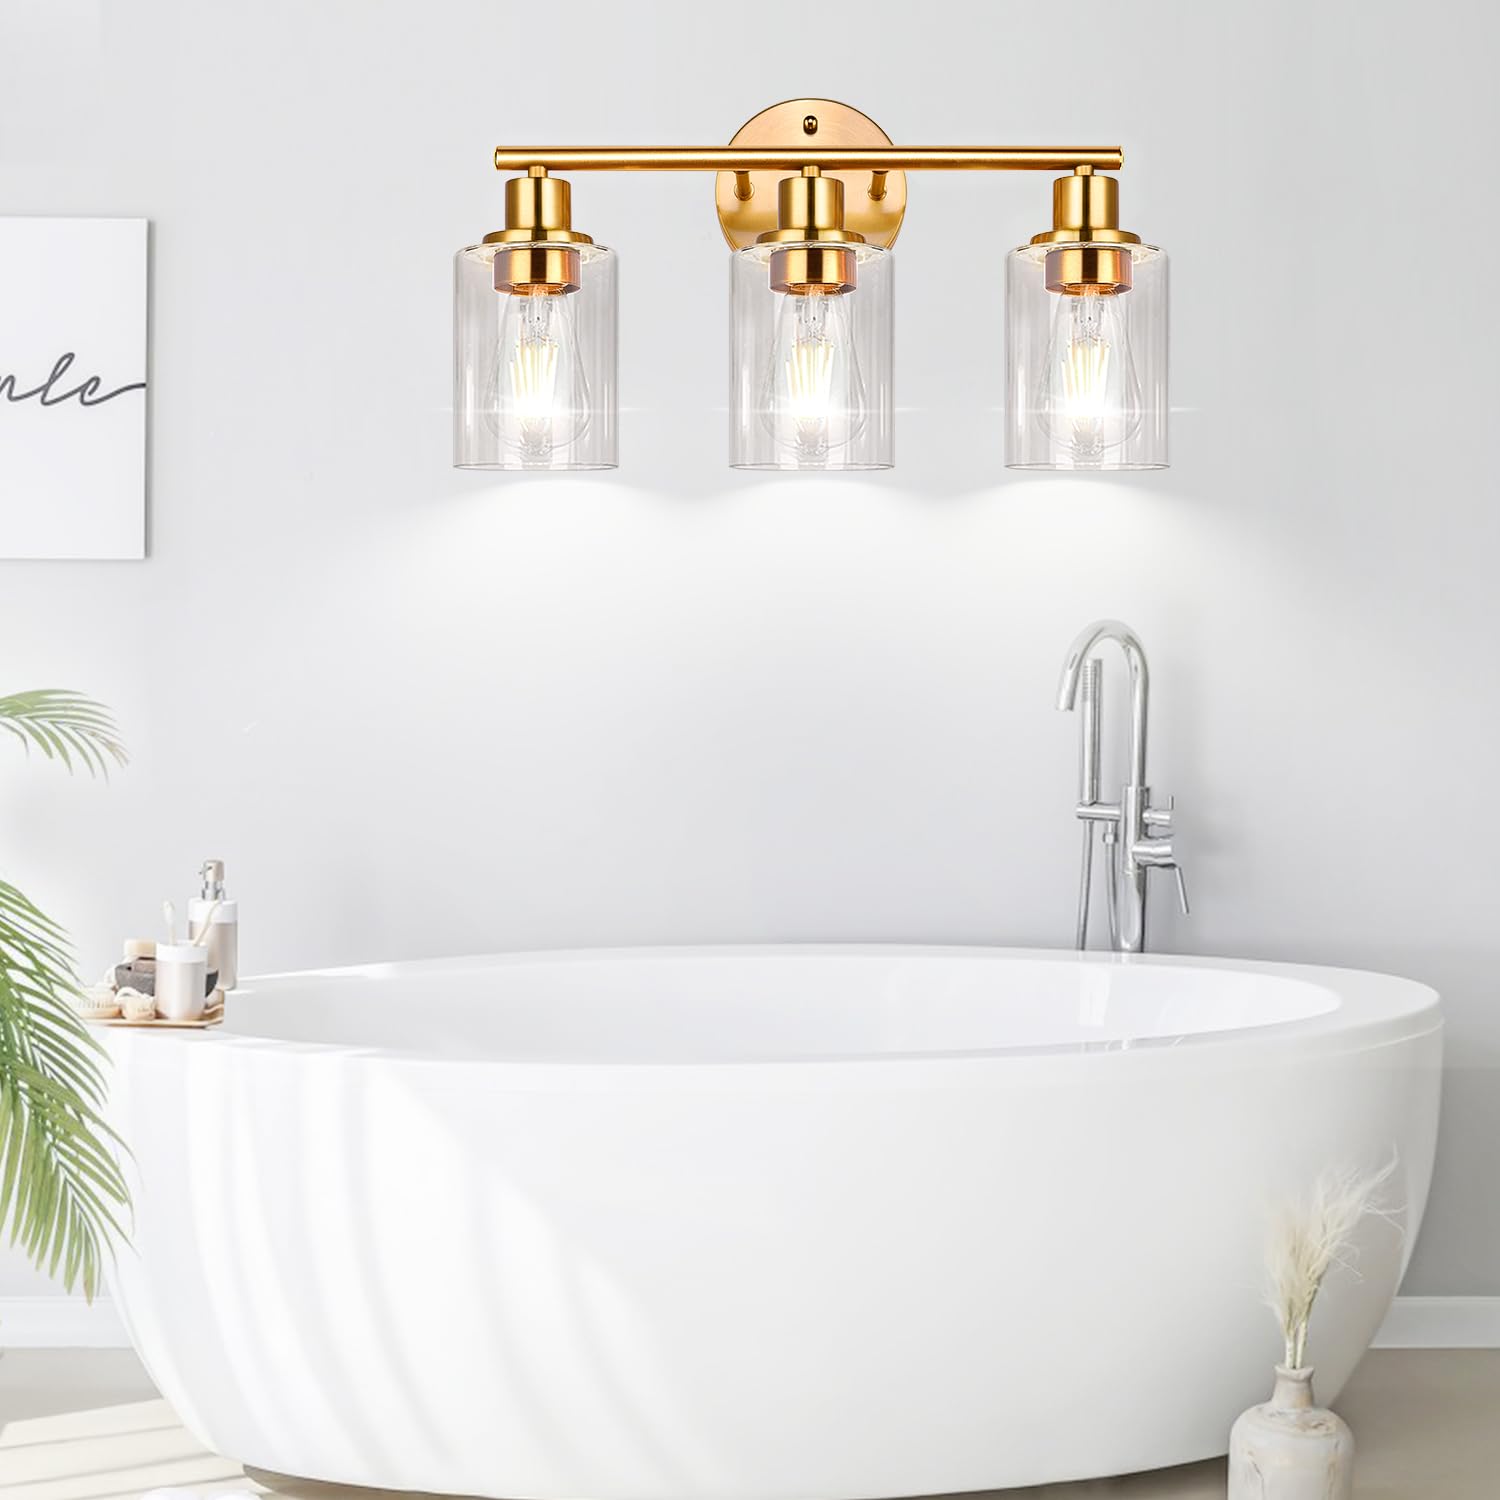 3-Light Gold Bathroom Light Fixtures, Modern Bathroom Vanity Light with Clear Glass Shade, Brushed Gold Bath Wall Mount Lights, Wall Lamp for Mirror Kitchen Bedroom Hallway Living Room Hallway